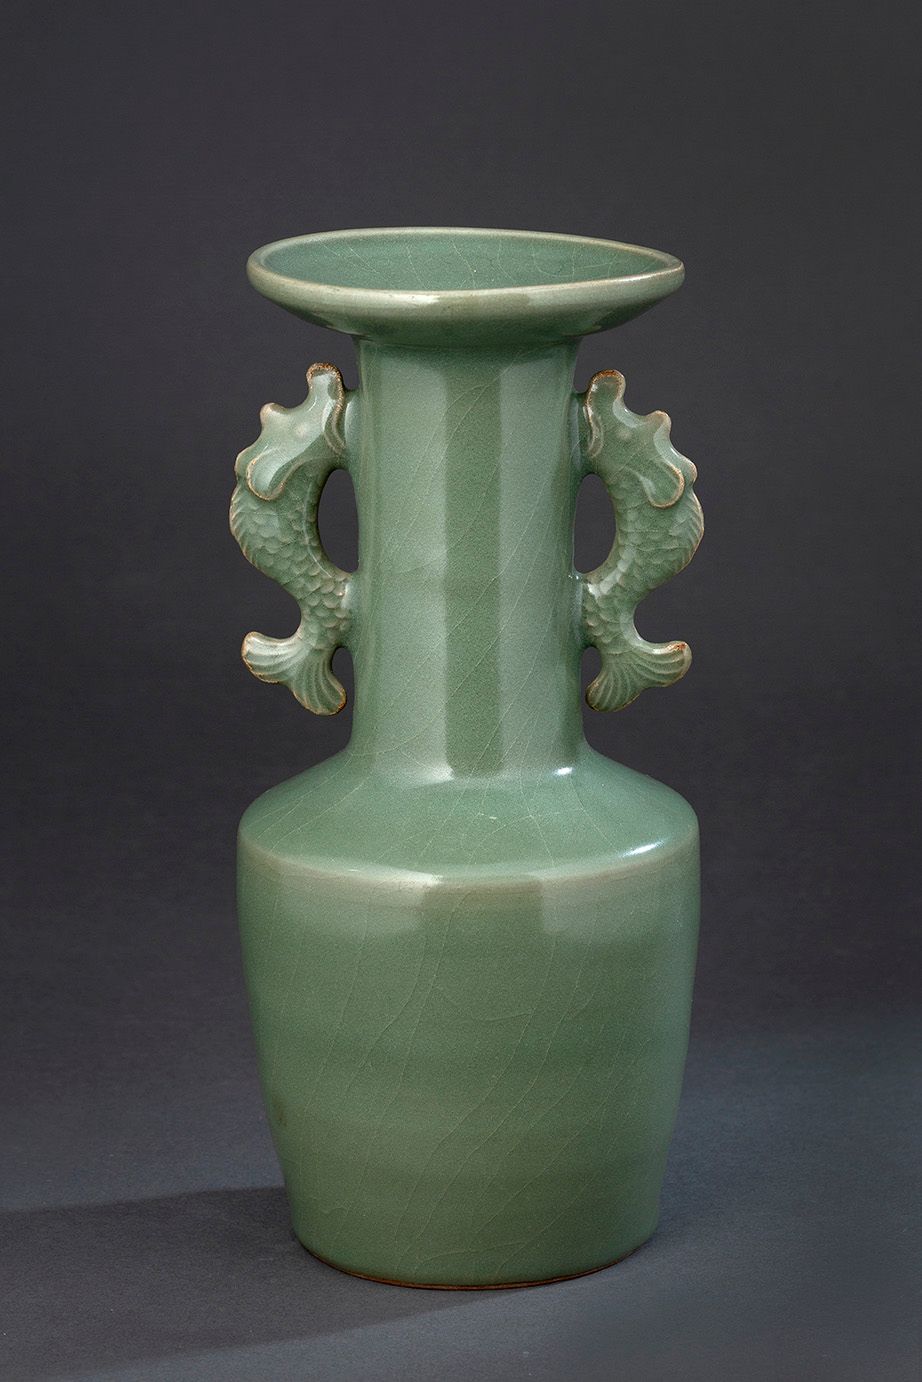 CHINE, FOURS DE LONGQUAN XIIIe SIÈCLE = 中国，龙泉窑 13世纪 
青瓷木槌形花瓶